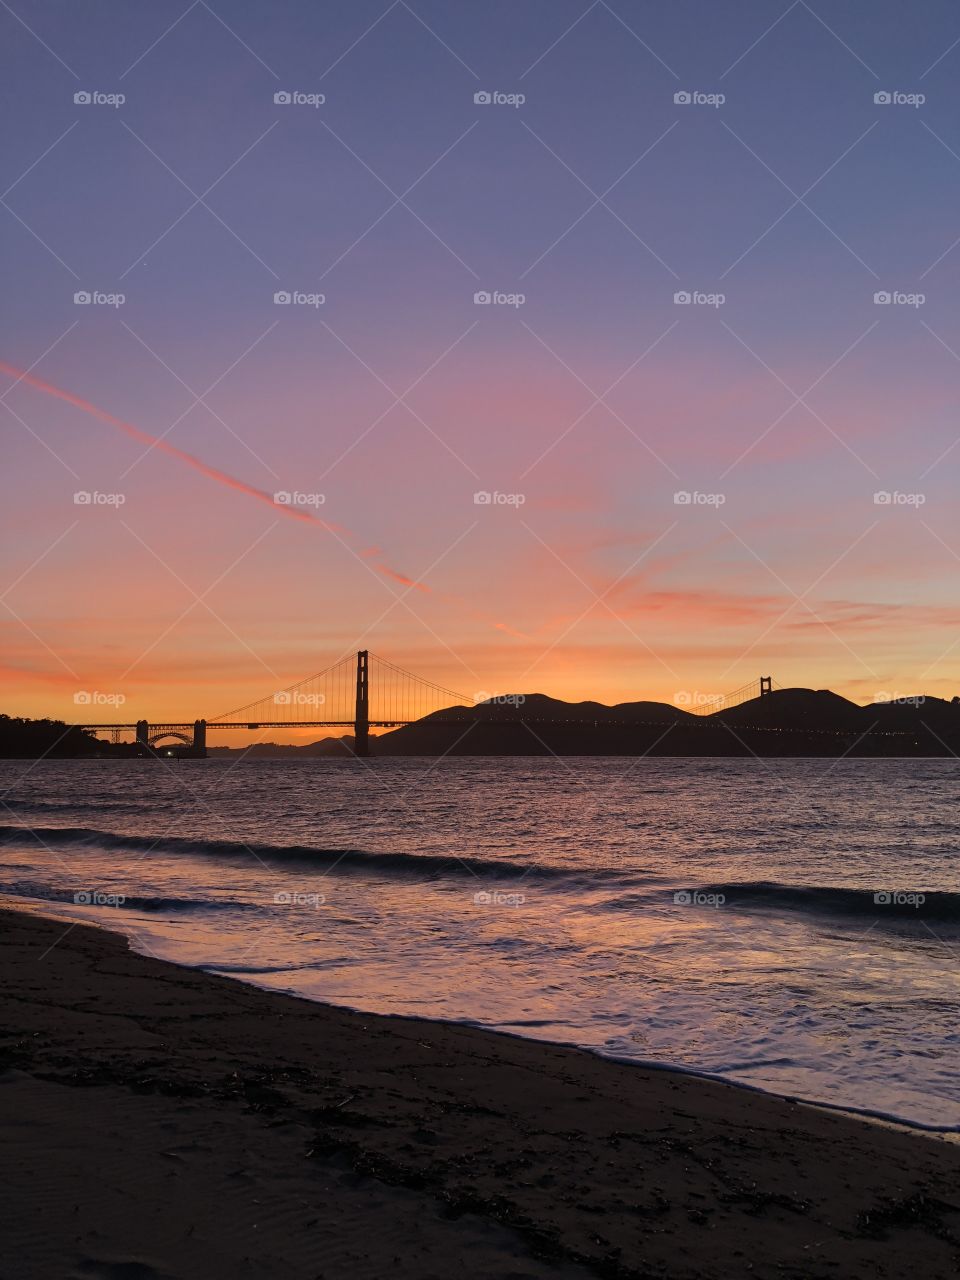 Sunset in San Francisco at the Golden Gate Bridge